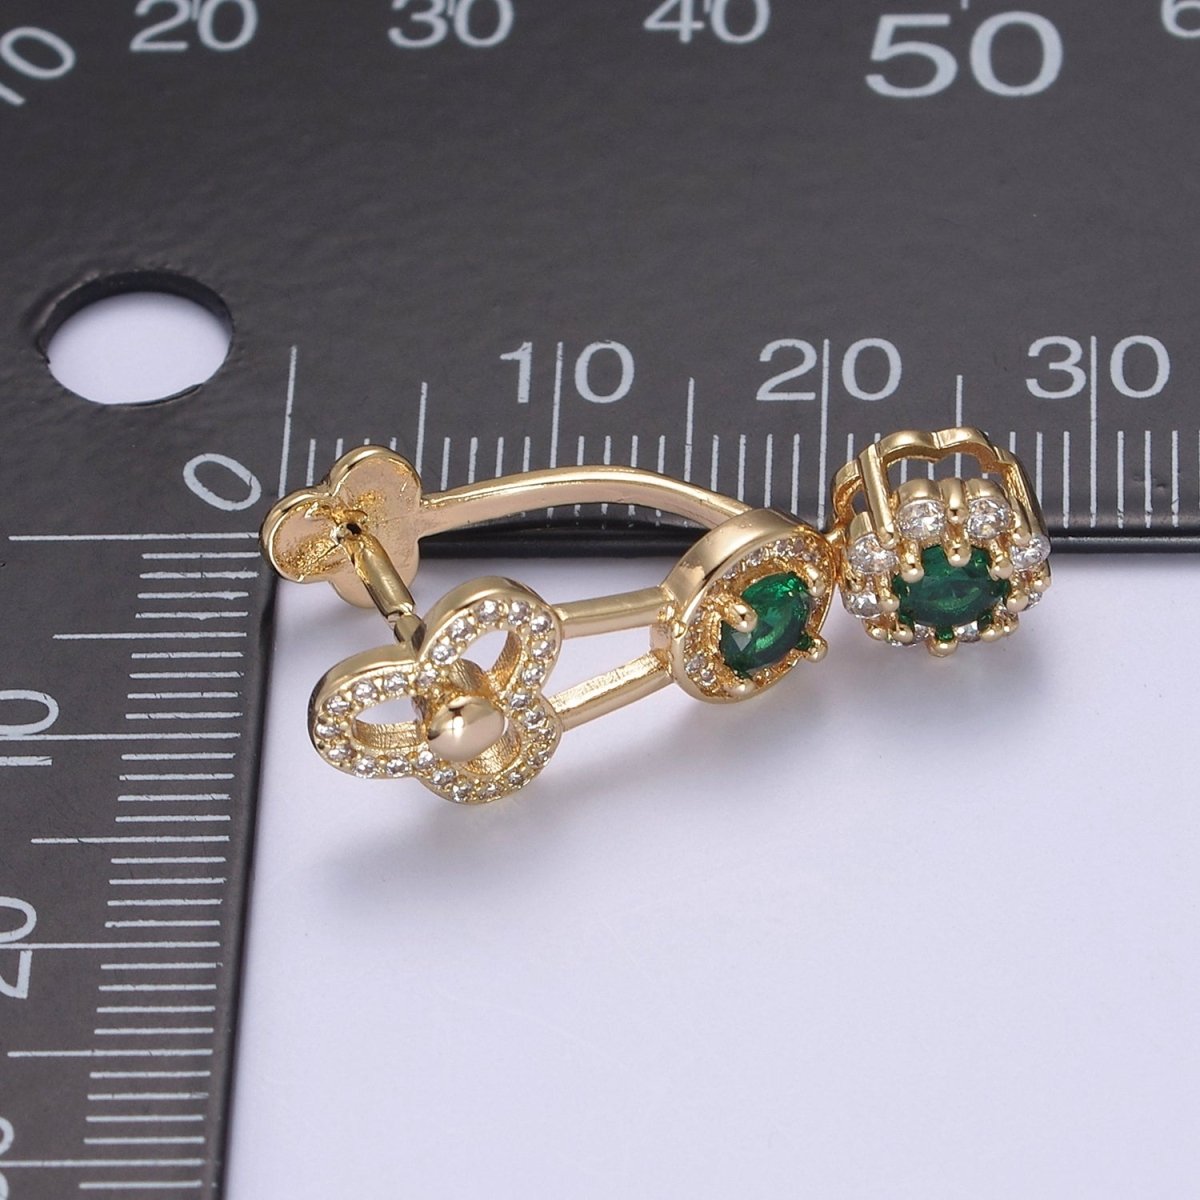 Green Cz Pinch Bail, Nickel Free, 28.3x9.6mm, Pendant bail, 16K gold Filled brass Jewelry Gold bail, Charm bail, Ice pick with Micro Pave CZ Stone L-651 - DLUXCA